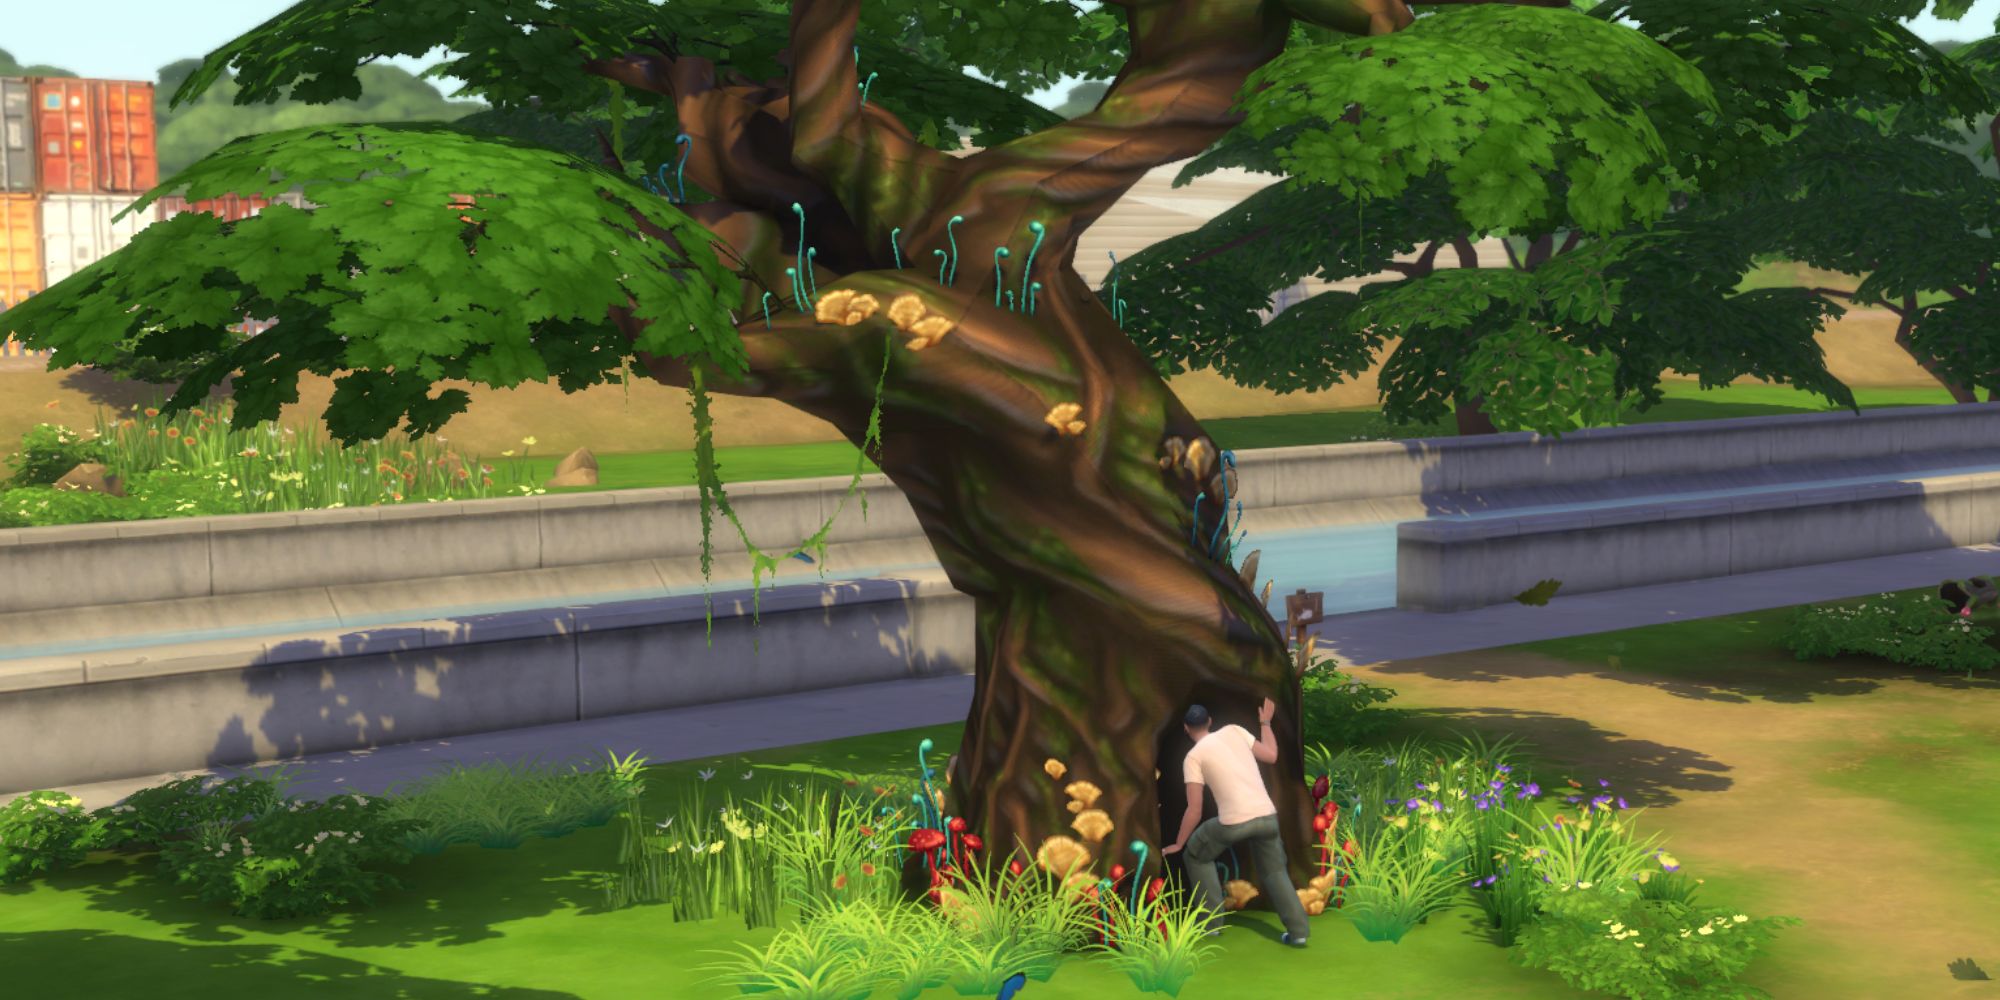 Sims 4 Bob Pancakes Entering Sylvan Glade through the tree in Foundry Cove